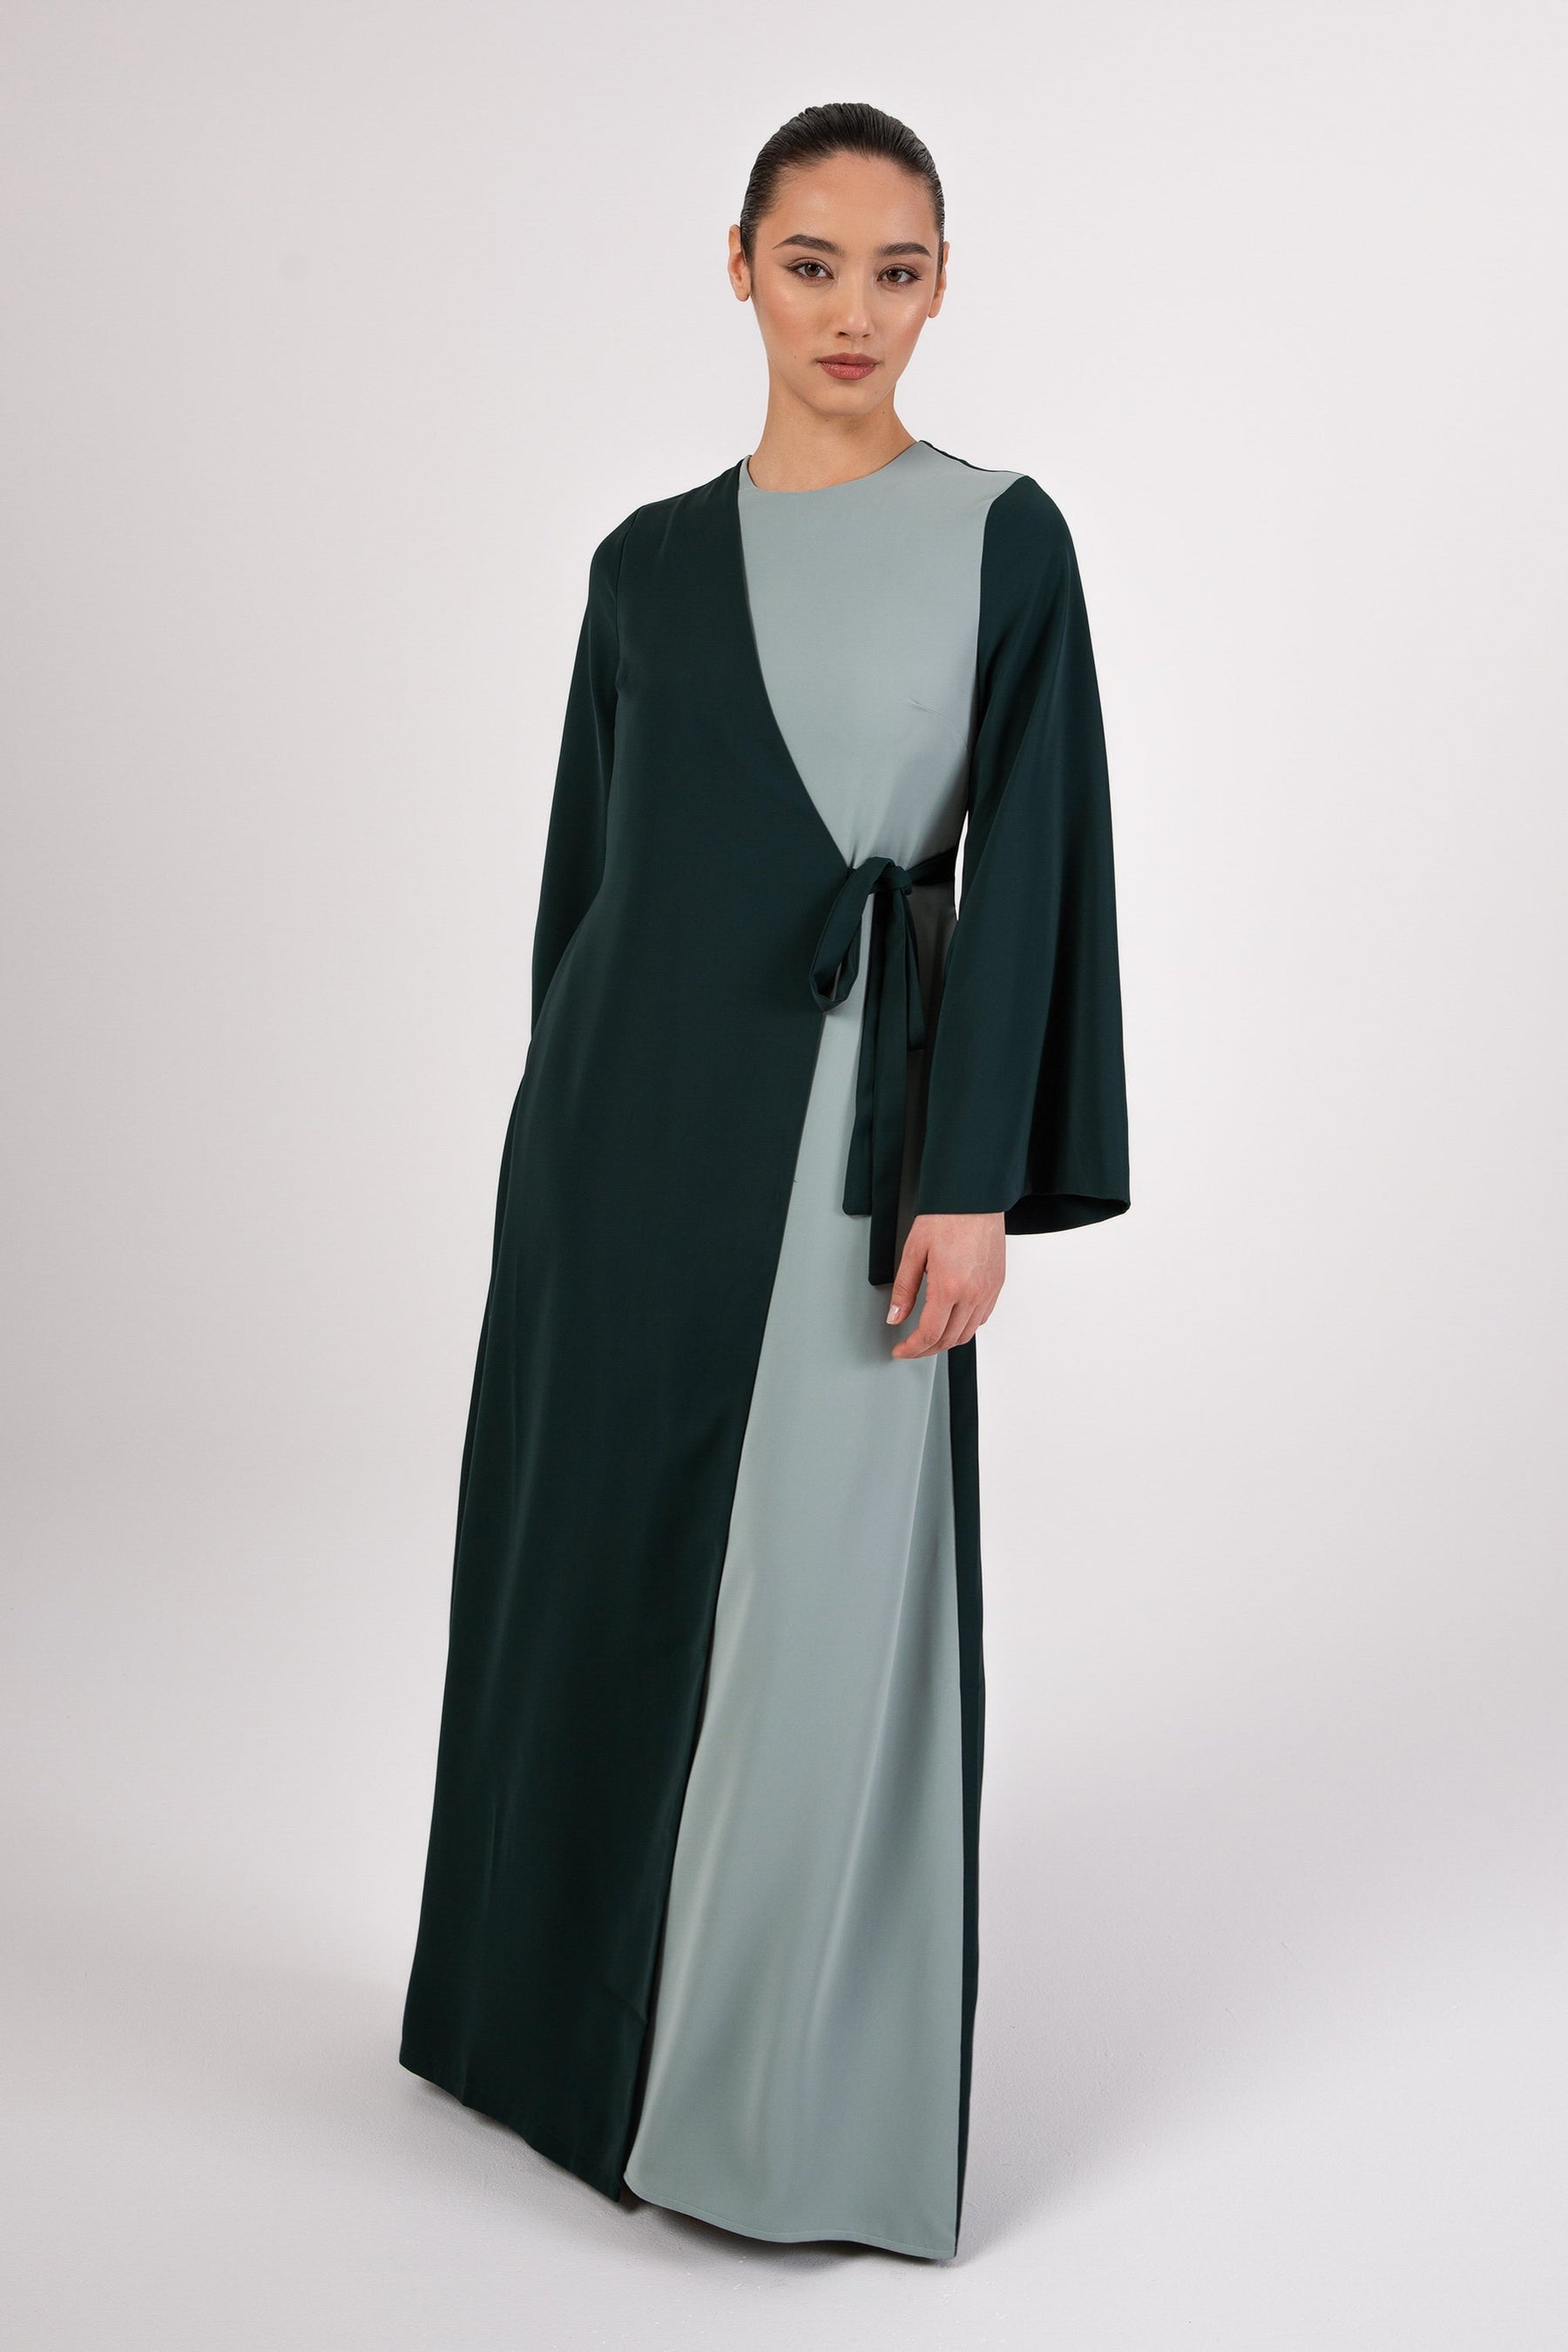 Omaya Two Tone Wrap Front Maxi Dress - Emerald Veiled 